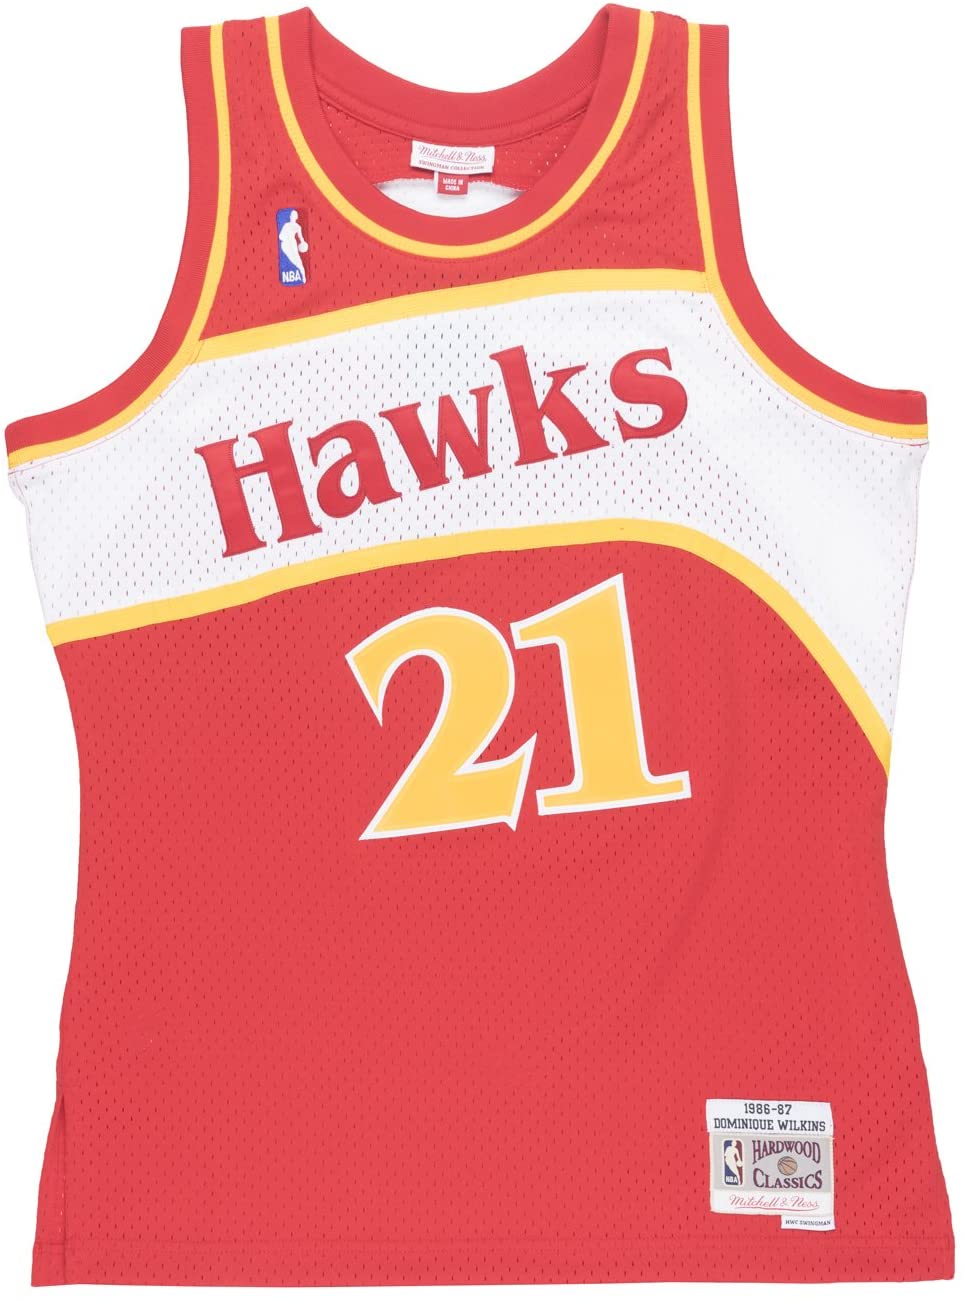 NBA Hardwood Classics Player 1986-87 Swingman Jersey Dominique Wilkins Hawks (Scarlet/Red)